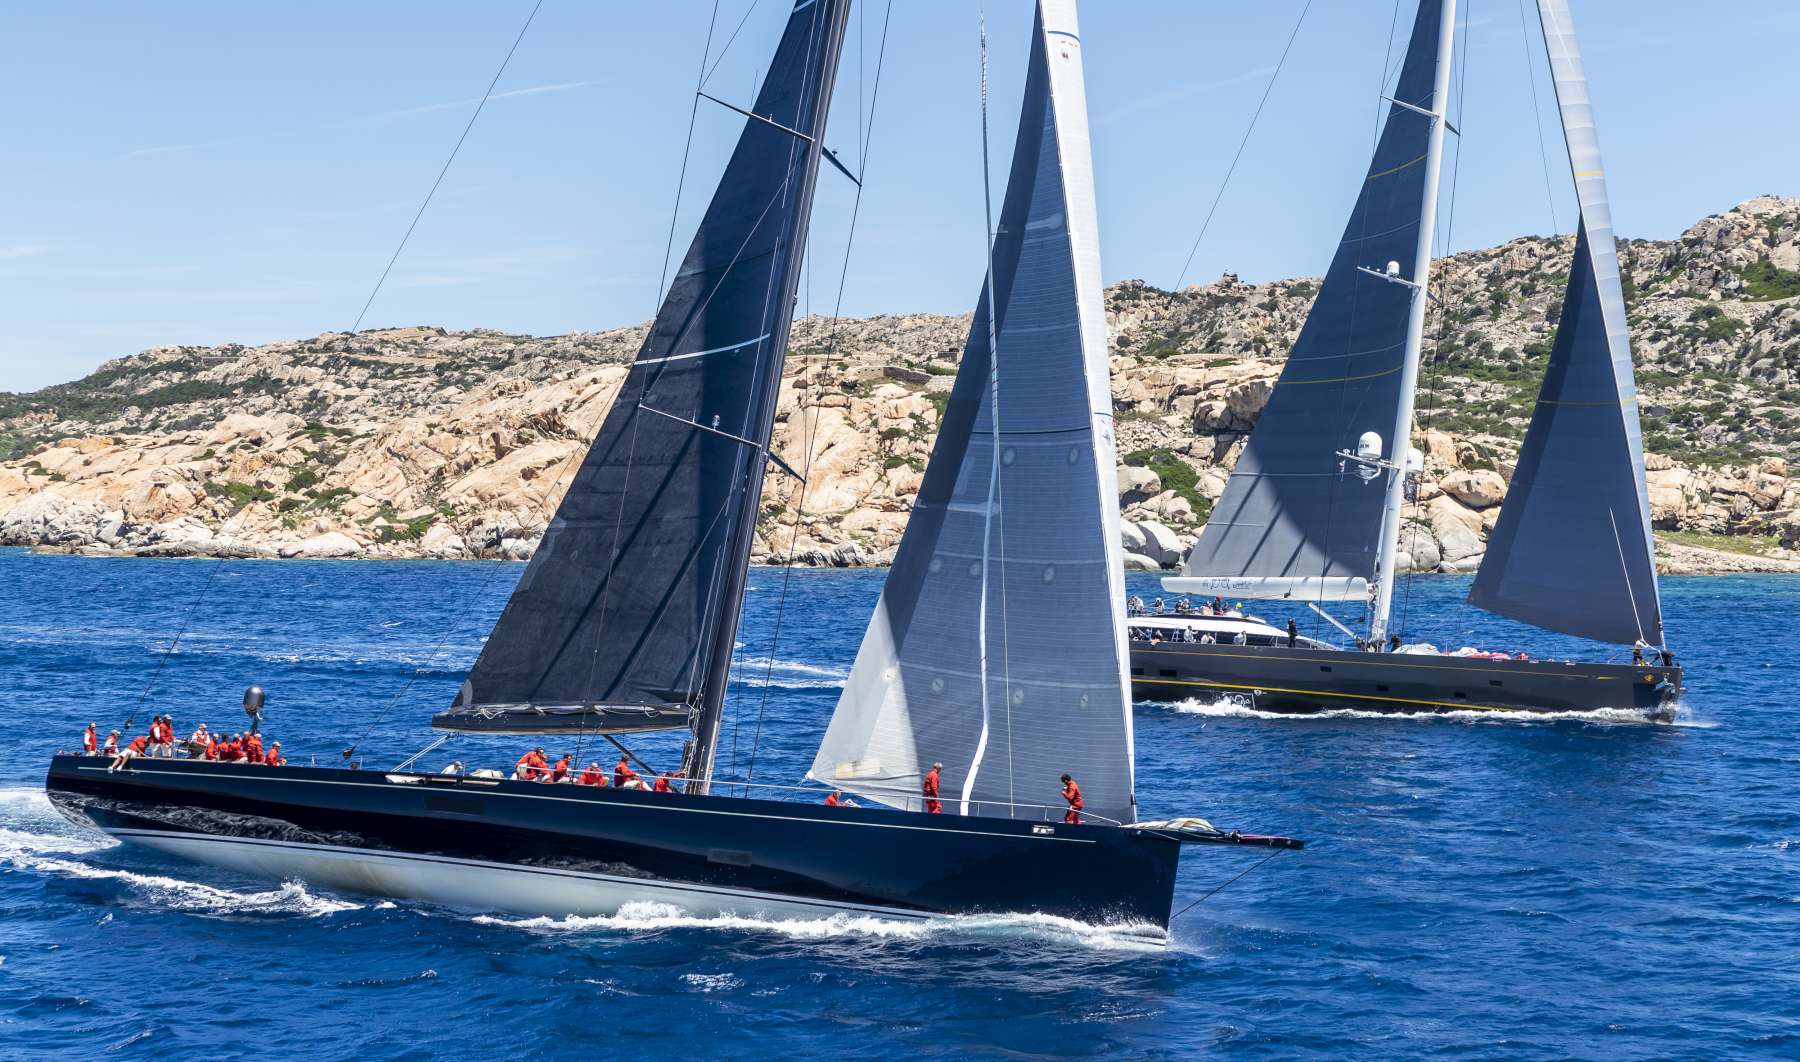 Loro Piana Superyacht Regatta: Una flotta imponente annunciata a Porto Cervo - NEWS - Yacht Club Costa Smeralda